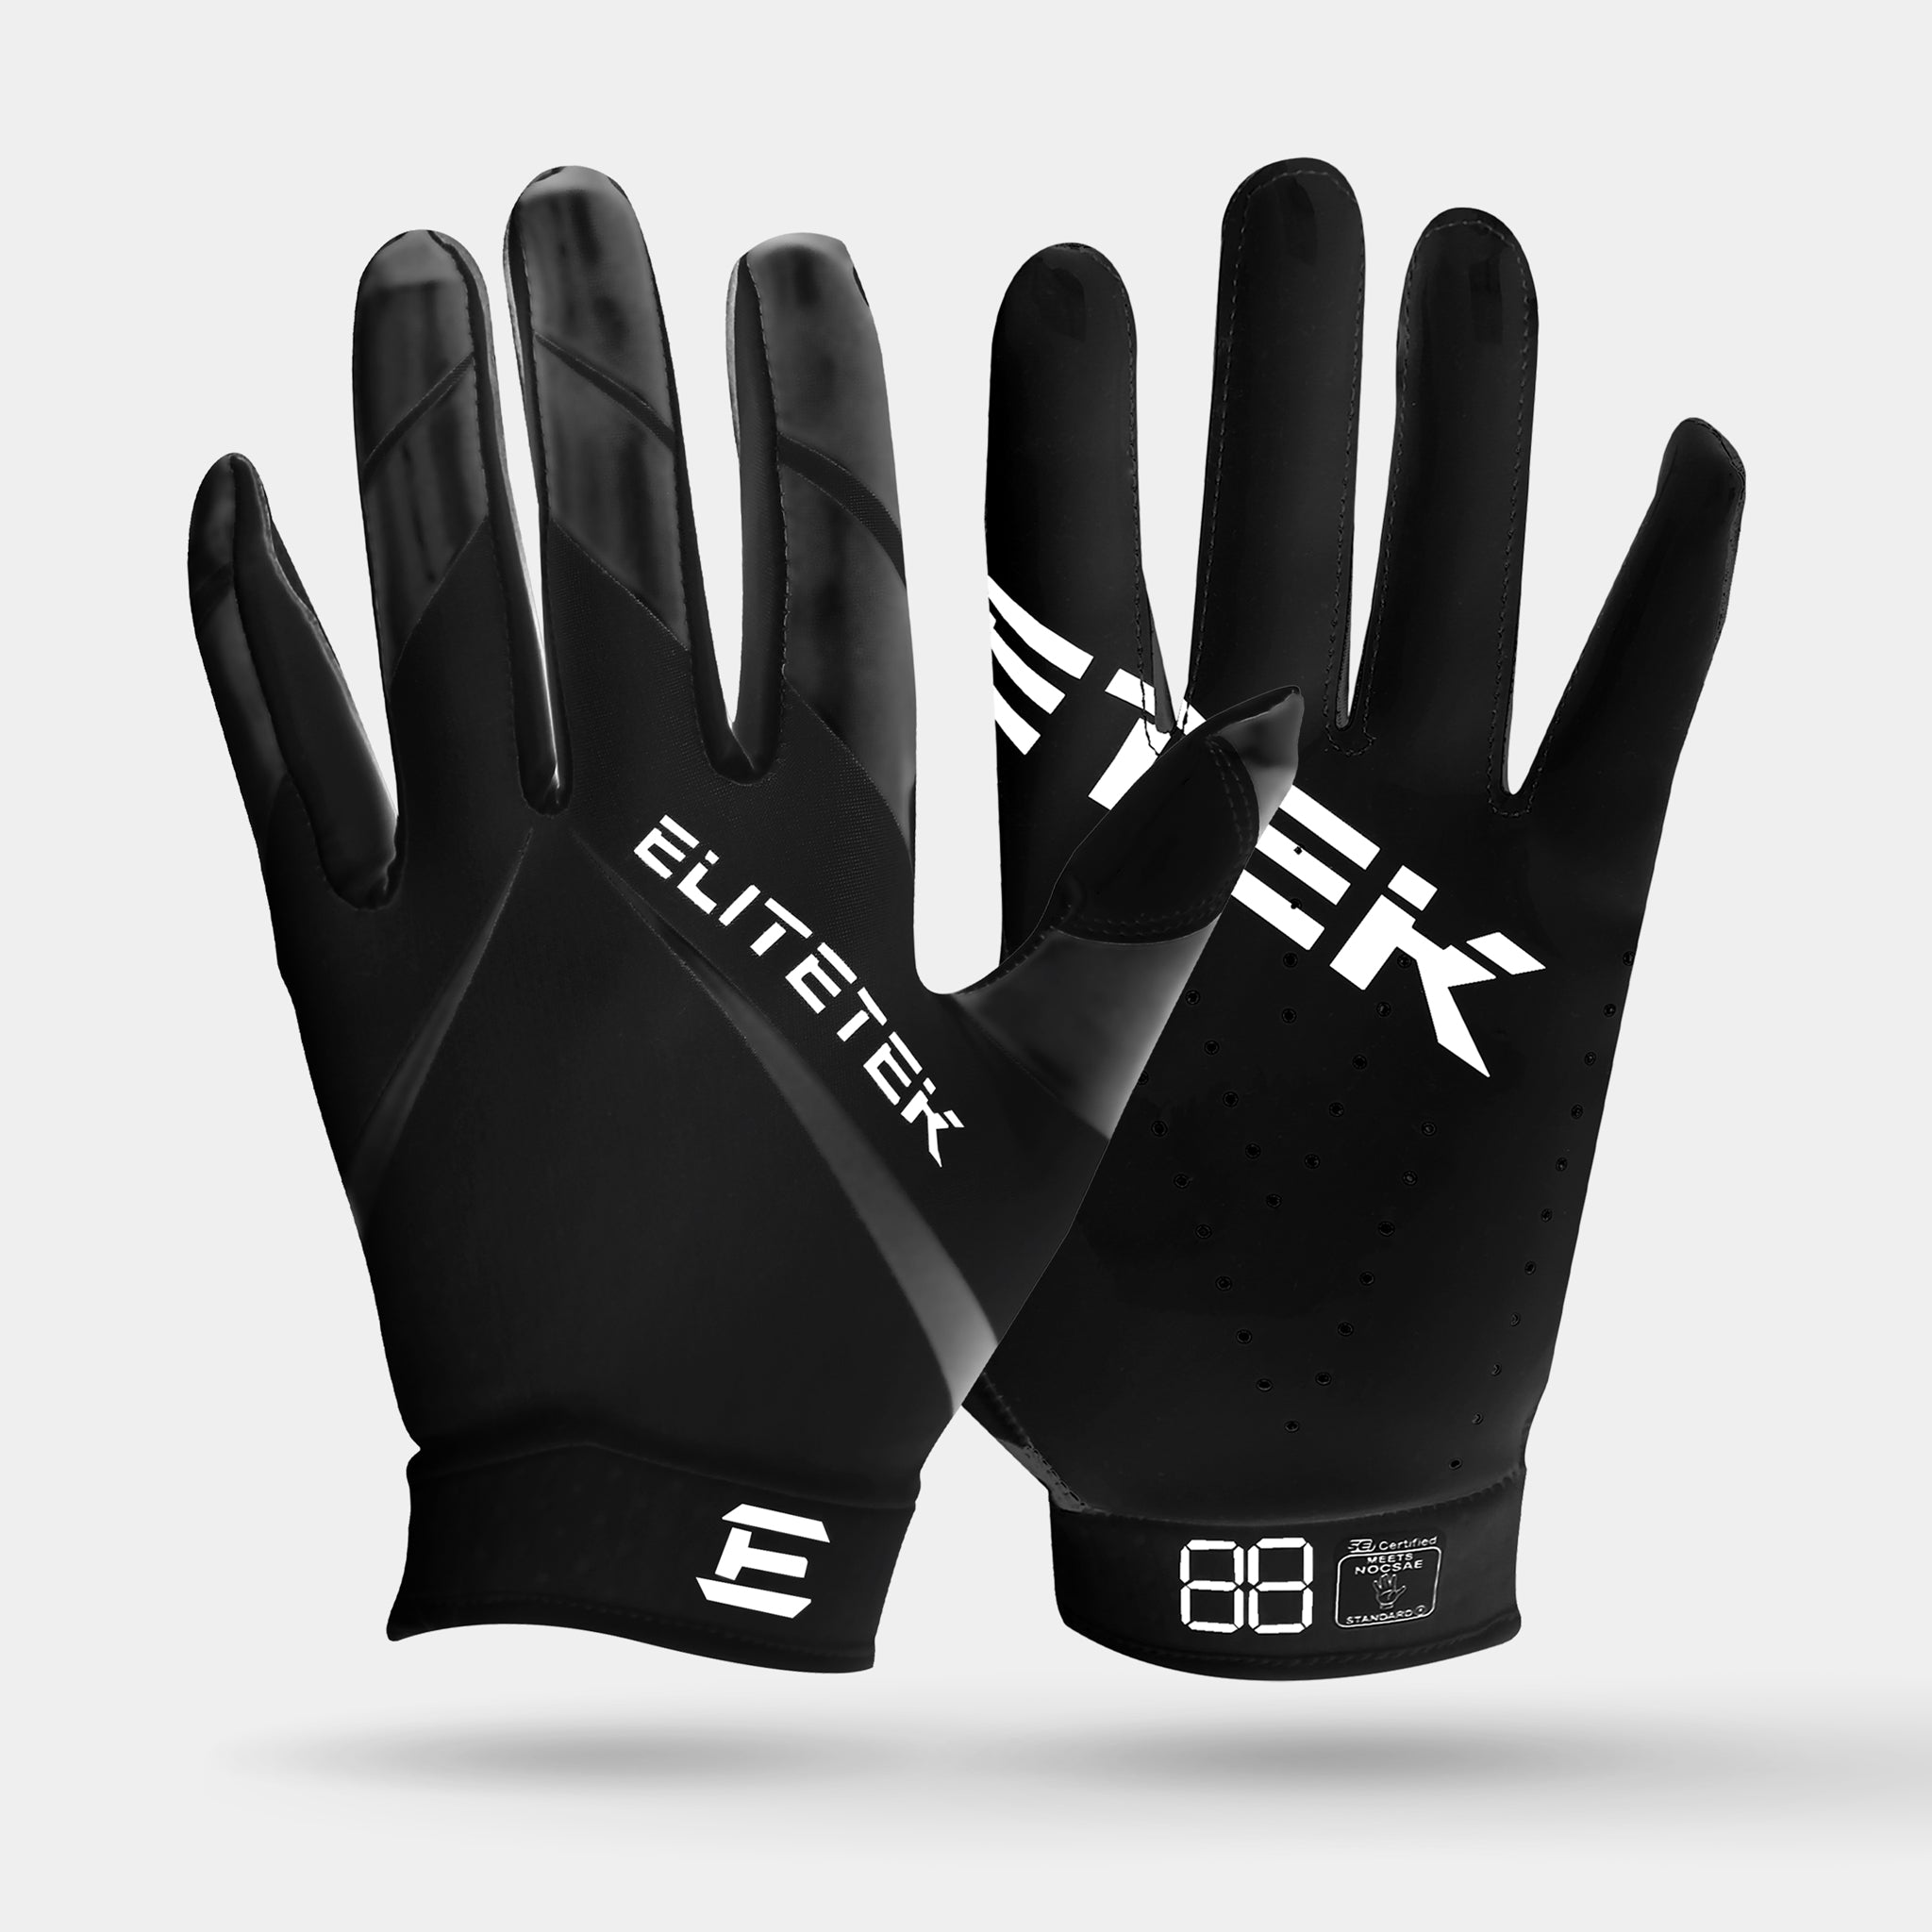 RG-14 Football Gloves - EliteTek.com